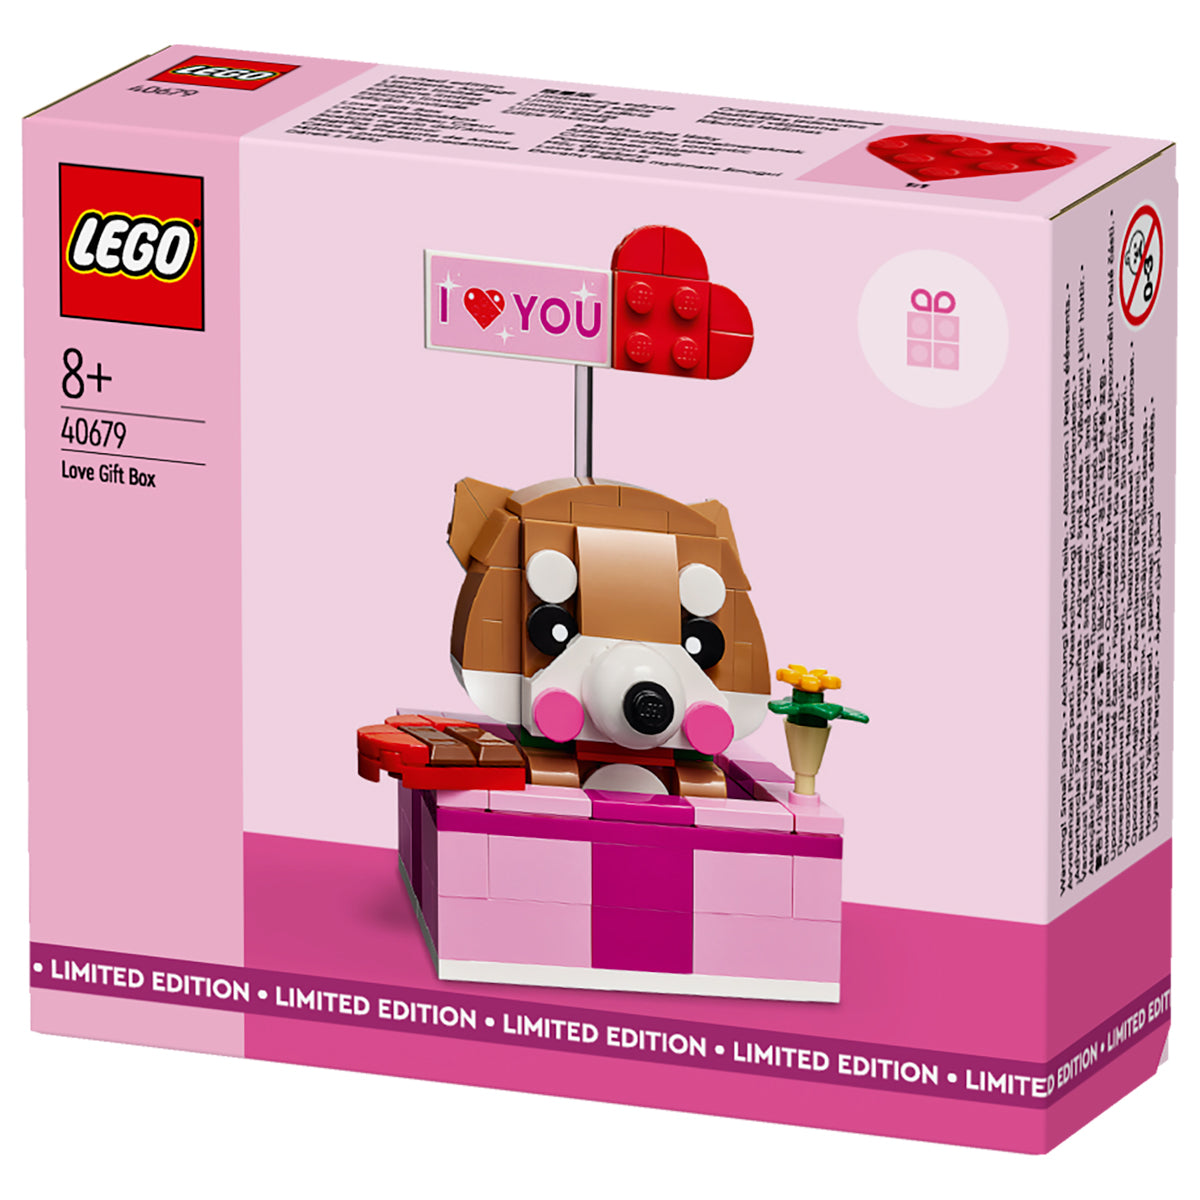 Love gift box